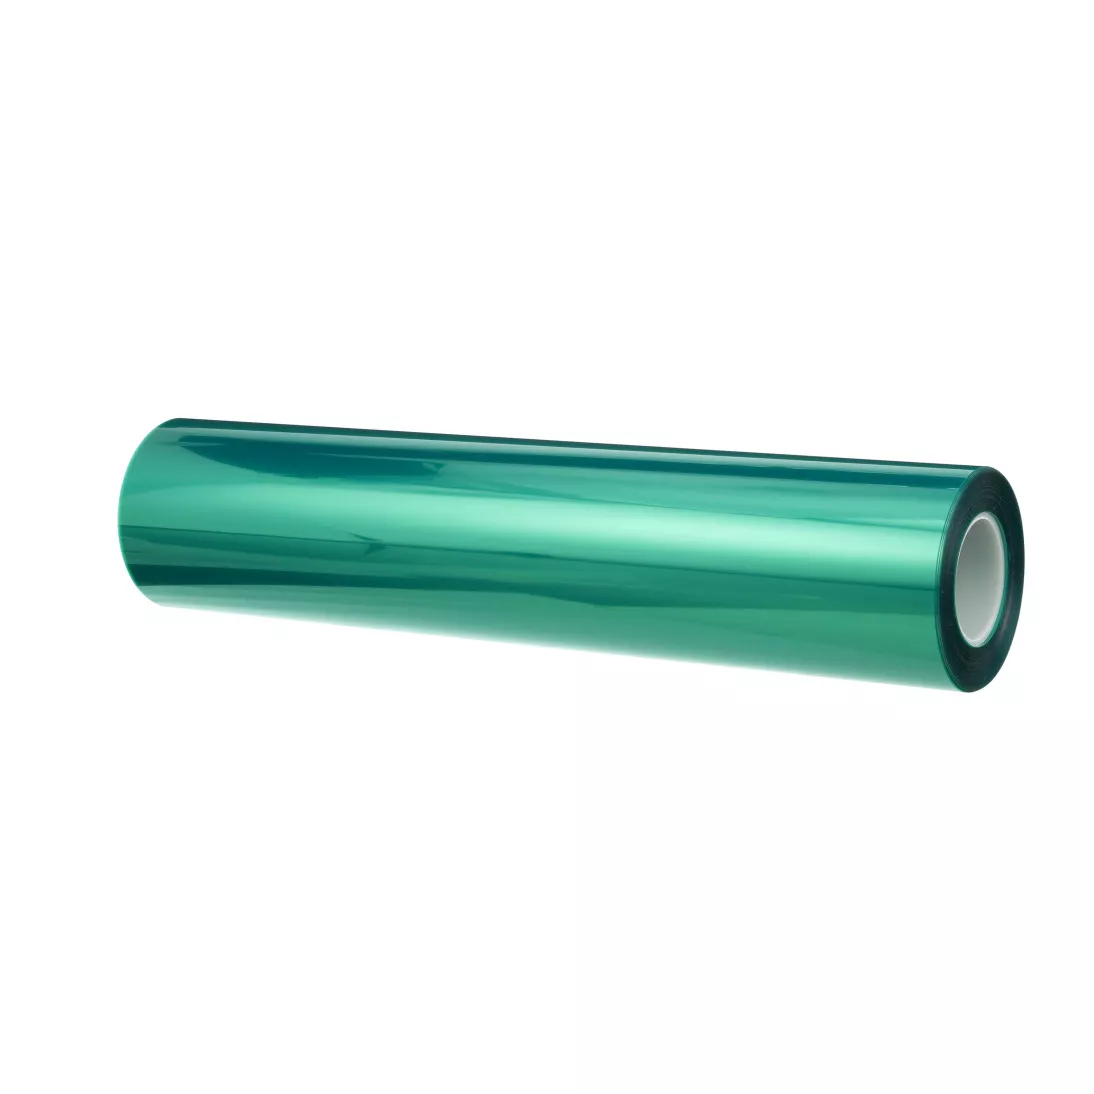 3M™ Polyester Tape 8992L, Green 1280 mm x 228.6 m, 3.2 mil, 1 roll per
case